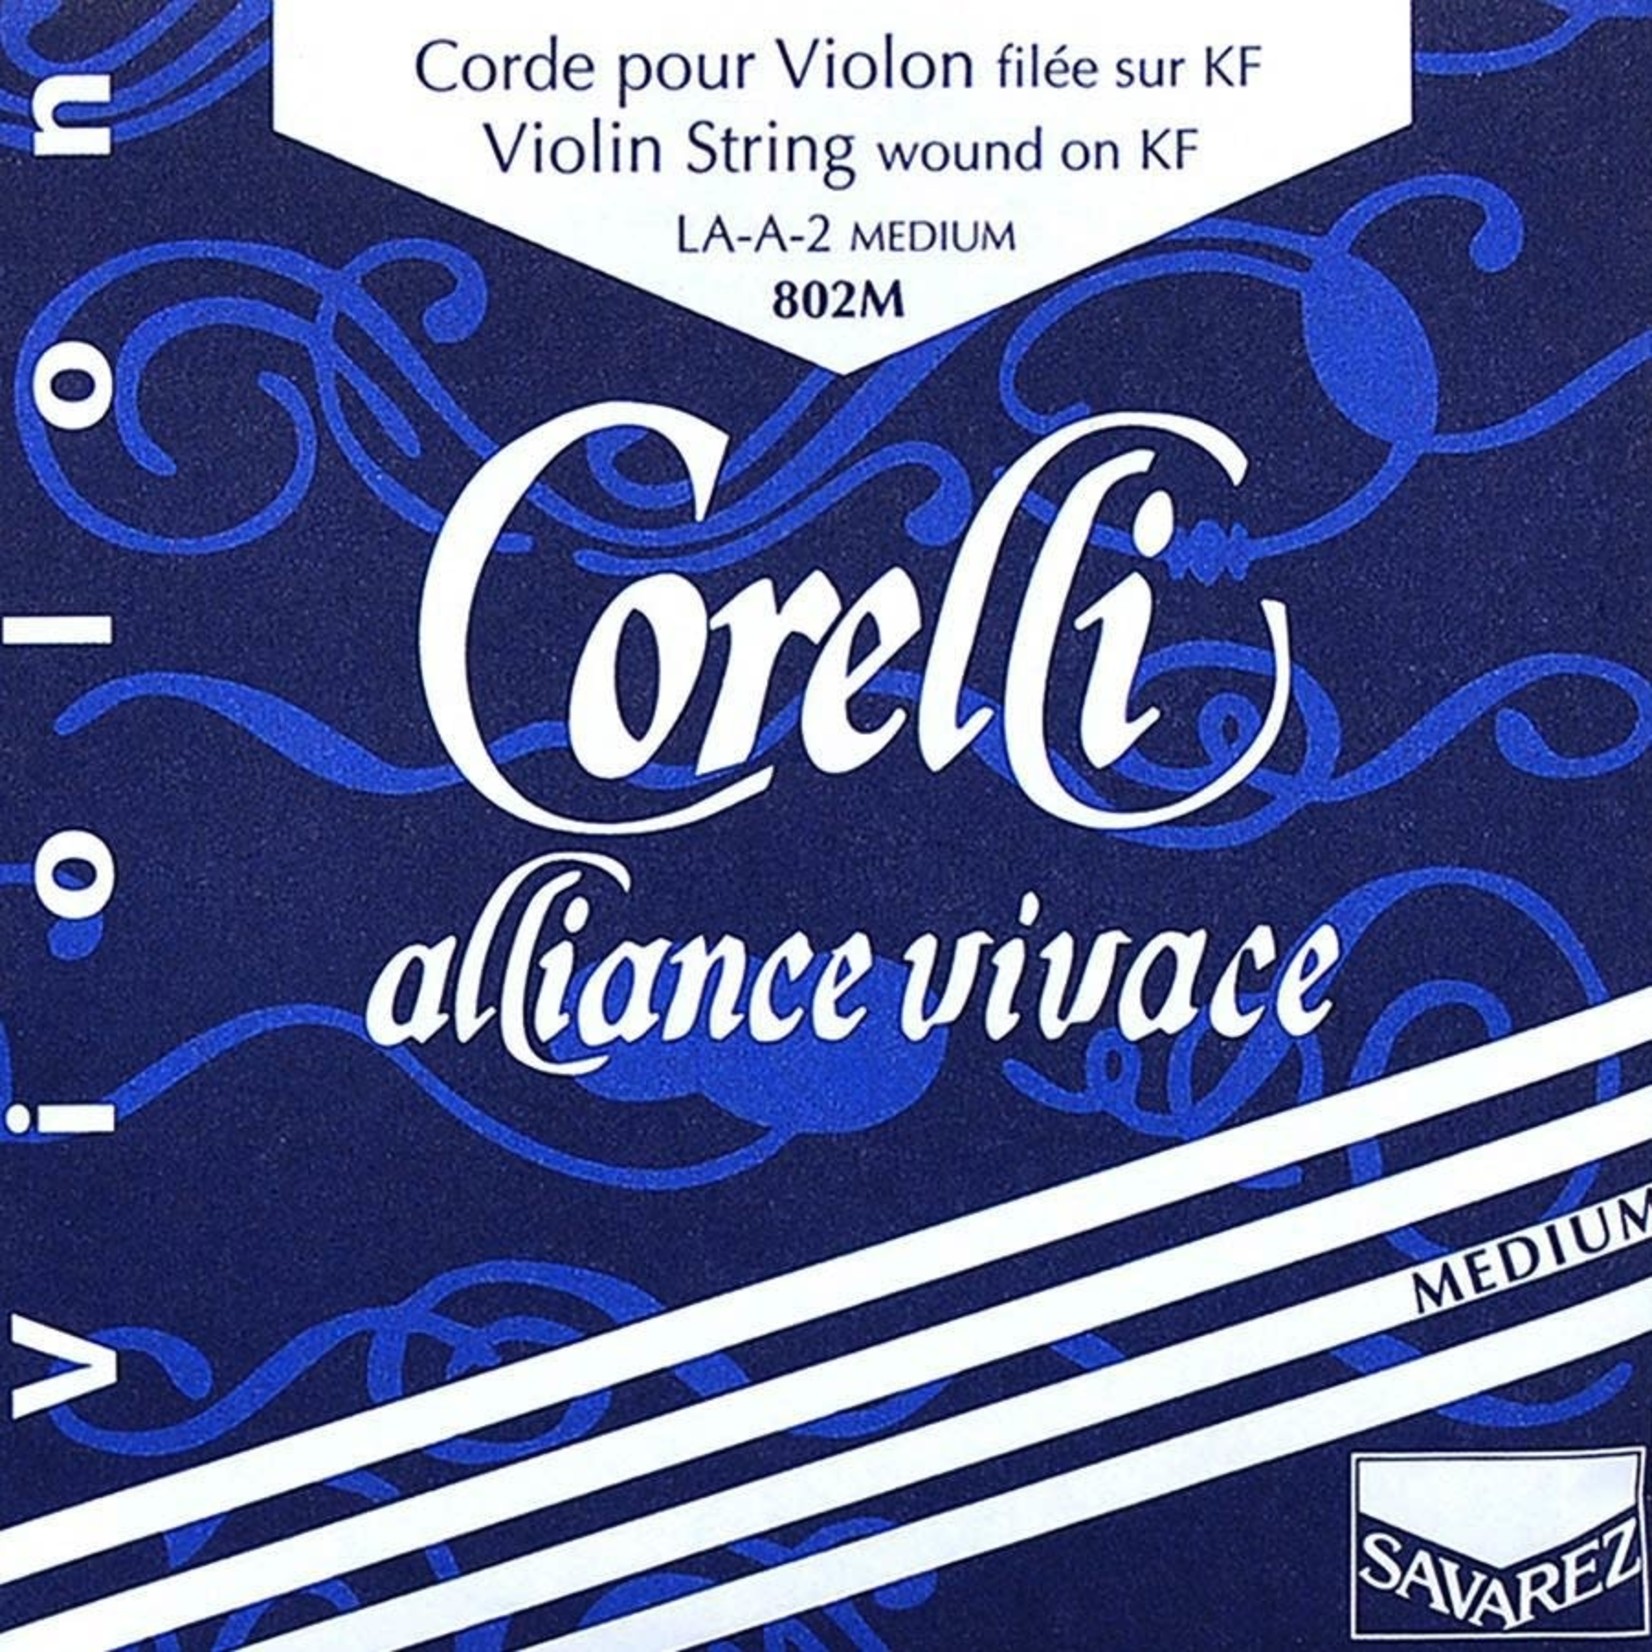 CORELLI Alliance vivace, corde de violon, la (a-2), 4/4